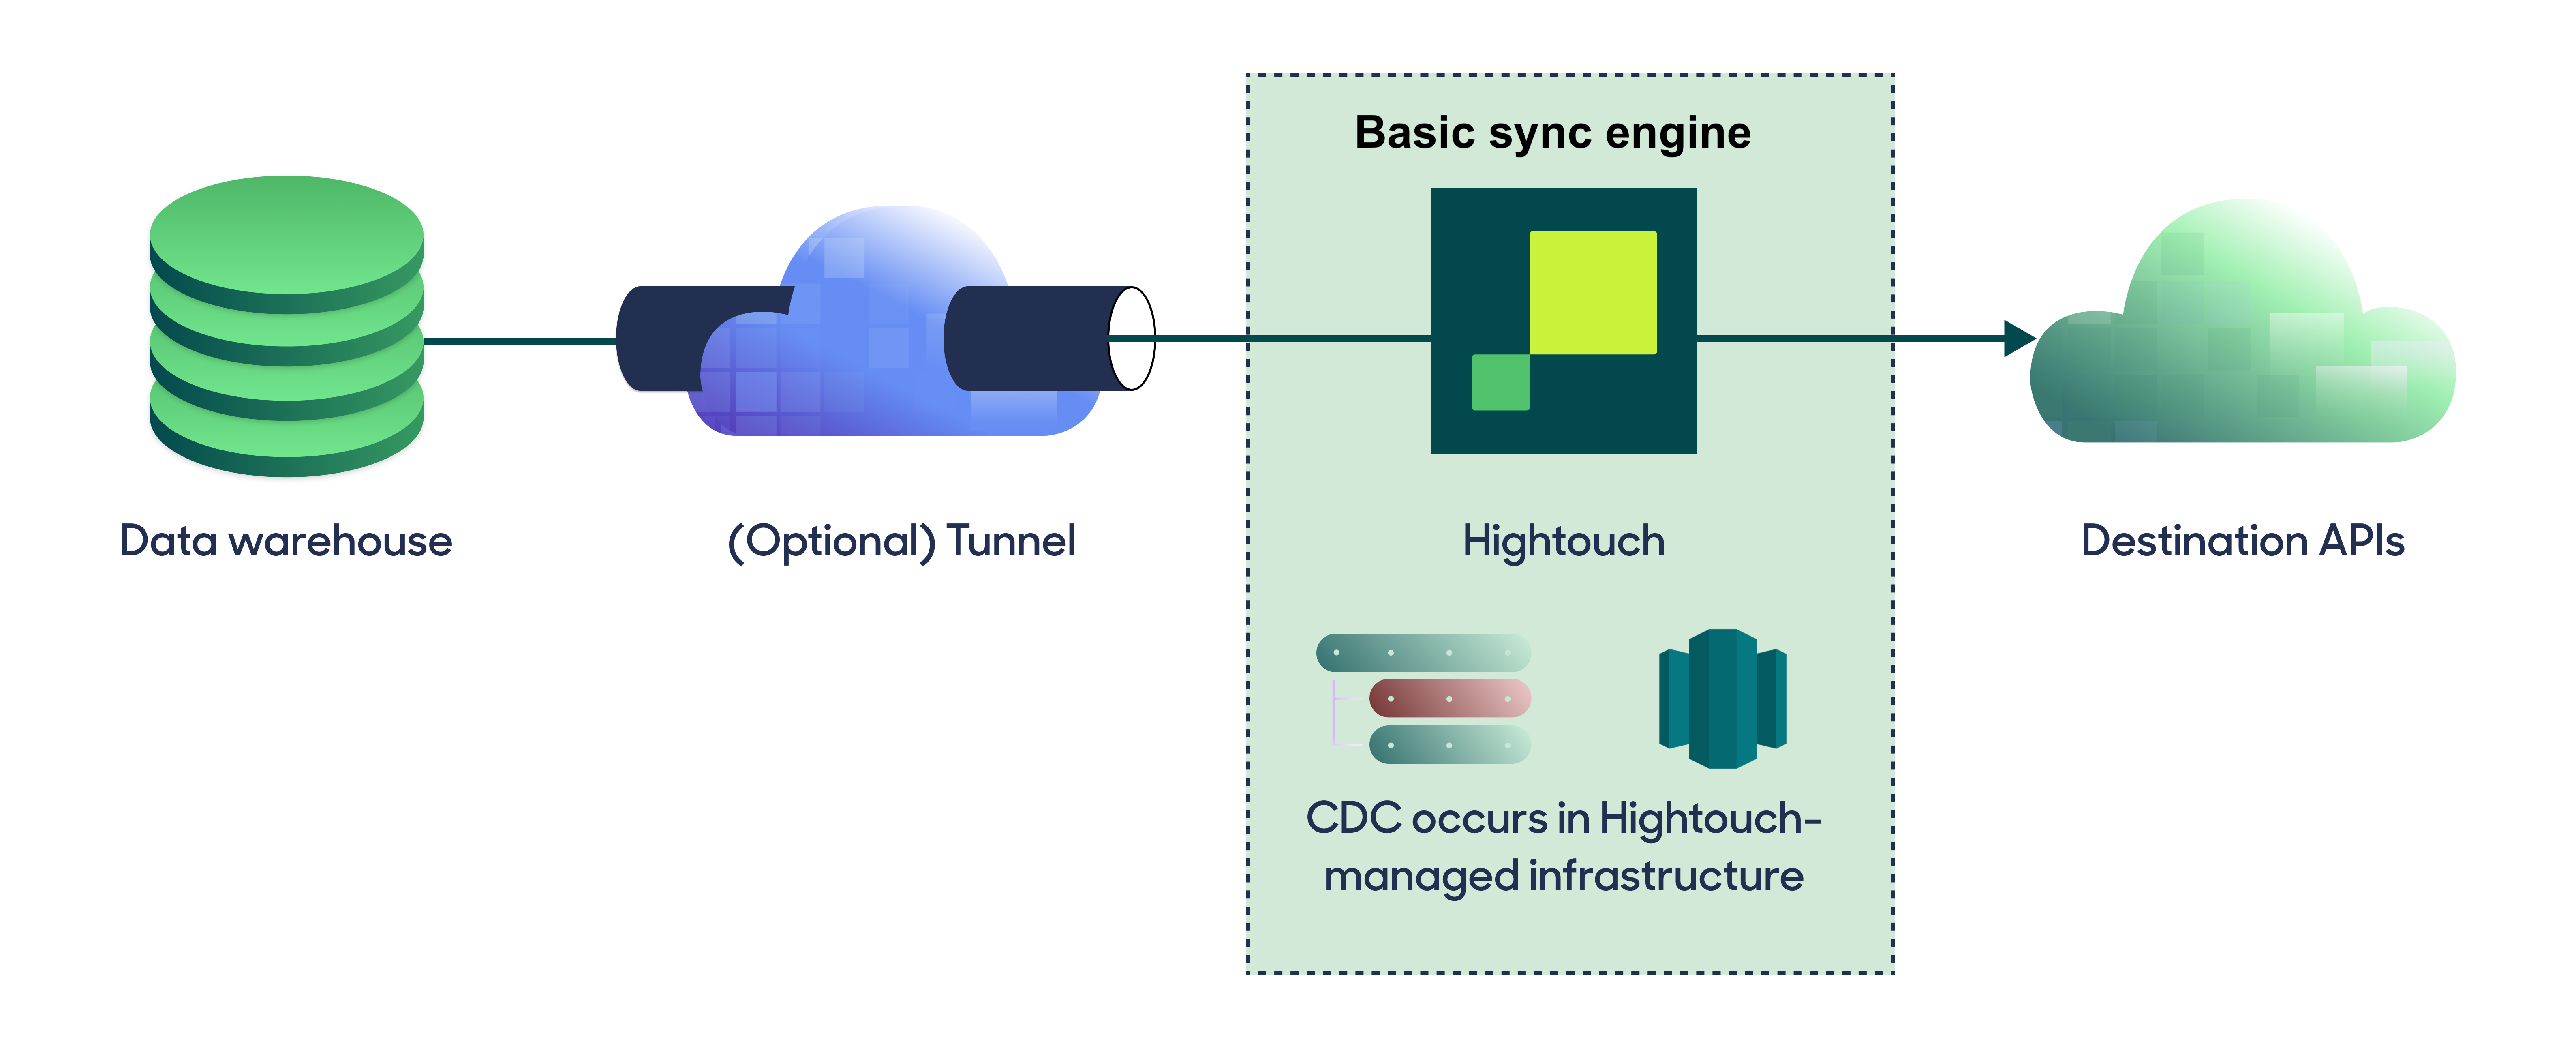 Basic sync architecture diagram